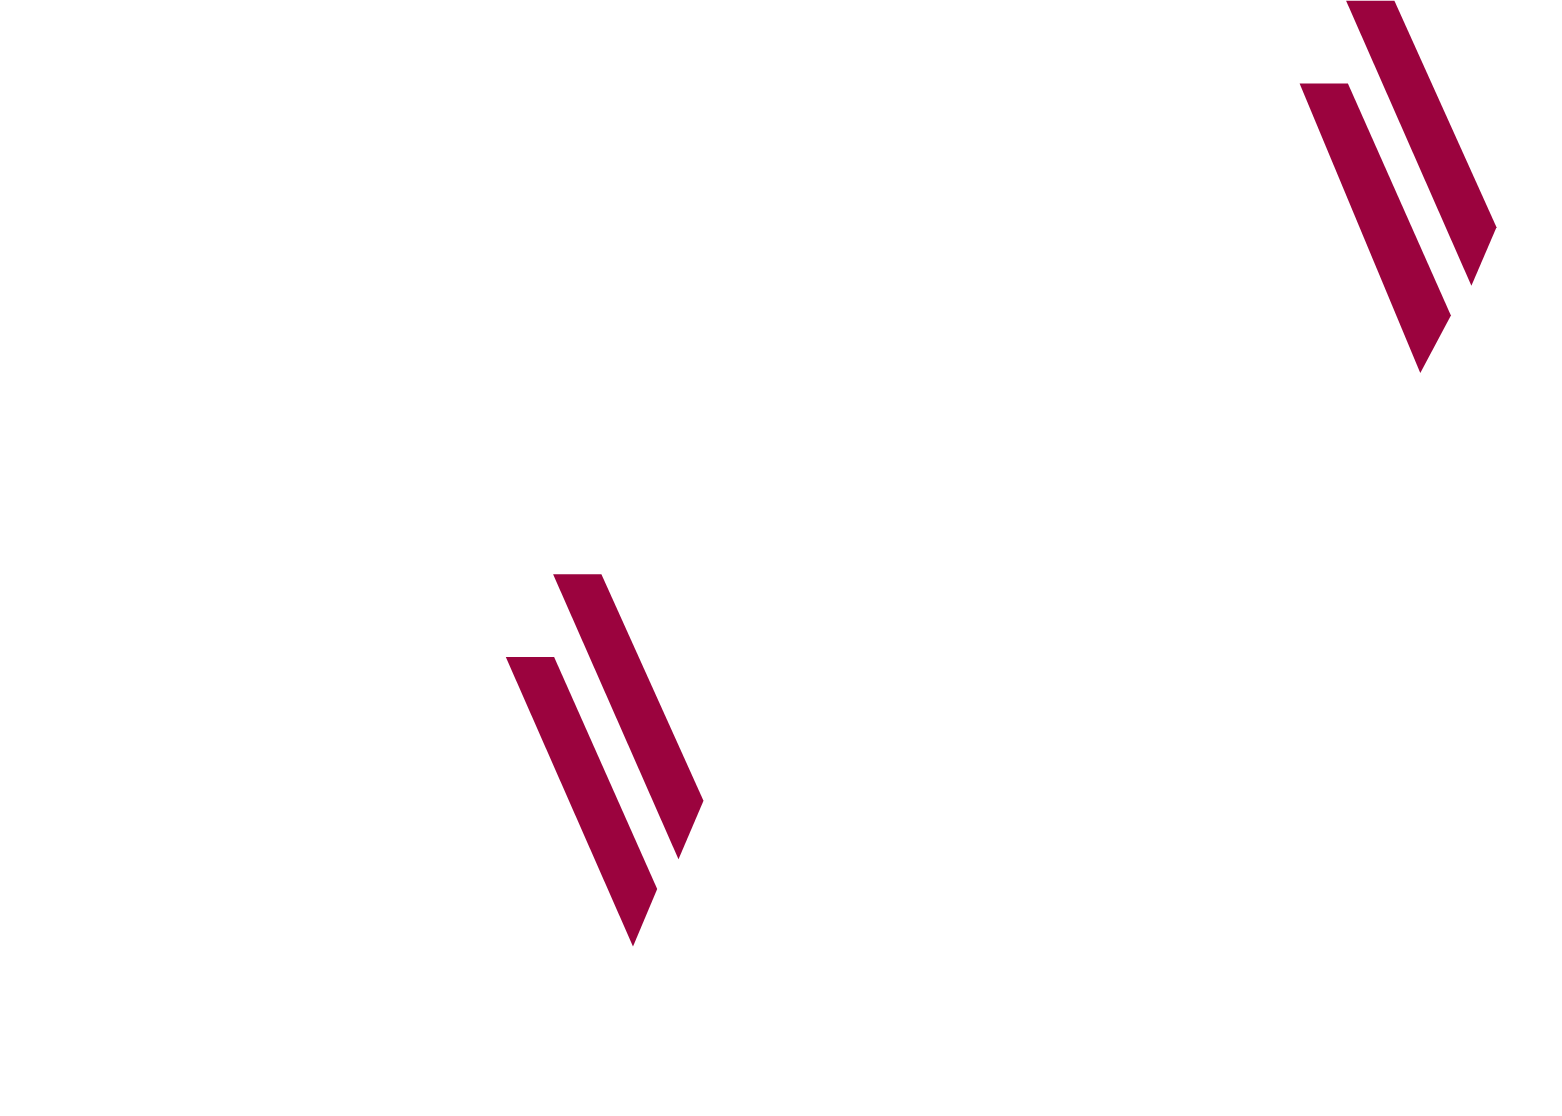 Al Imtiaz Investment Group Company logo large for dark backgrounds (transparent PNG)